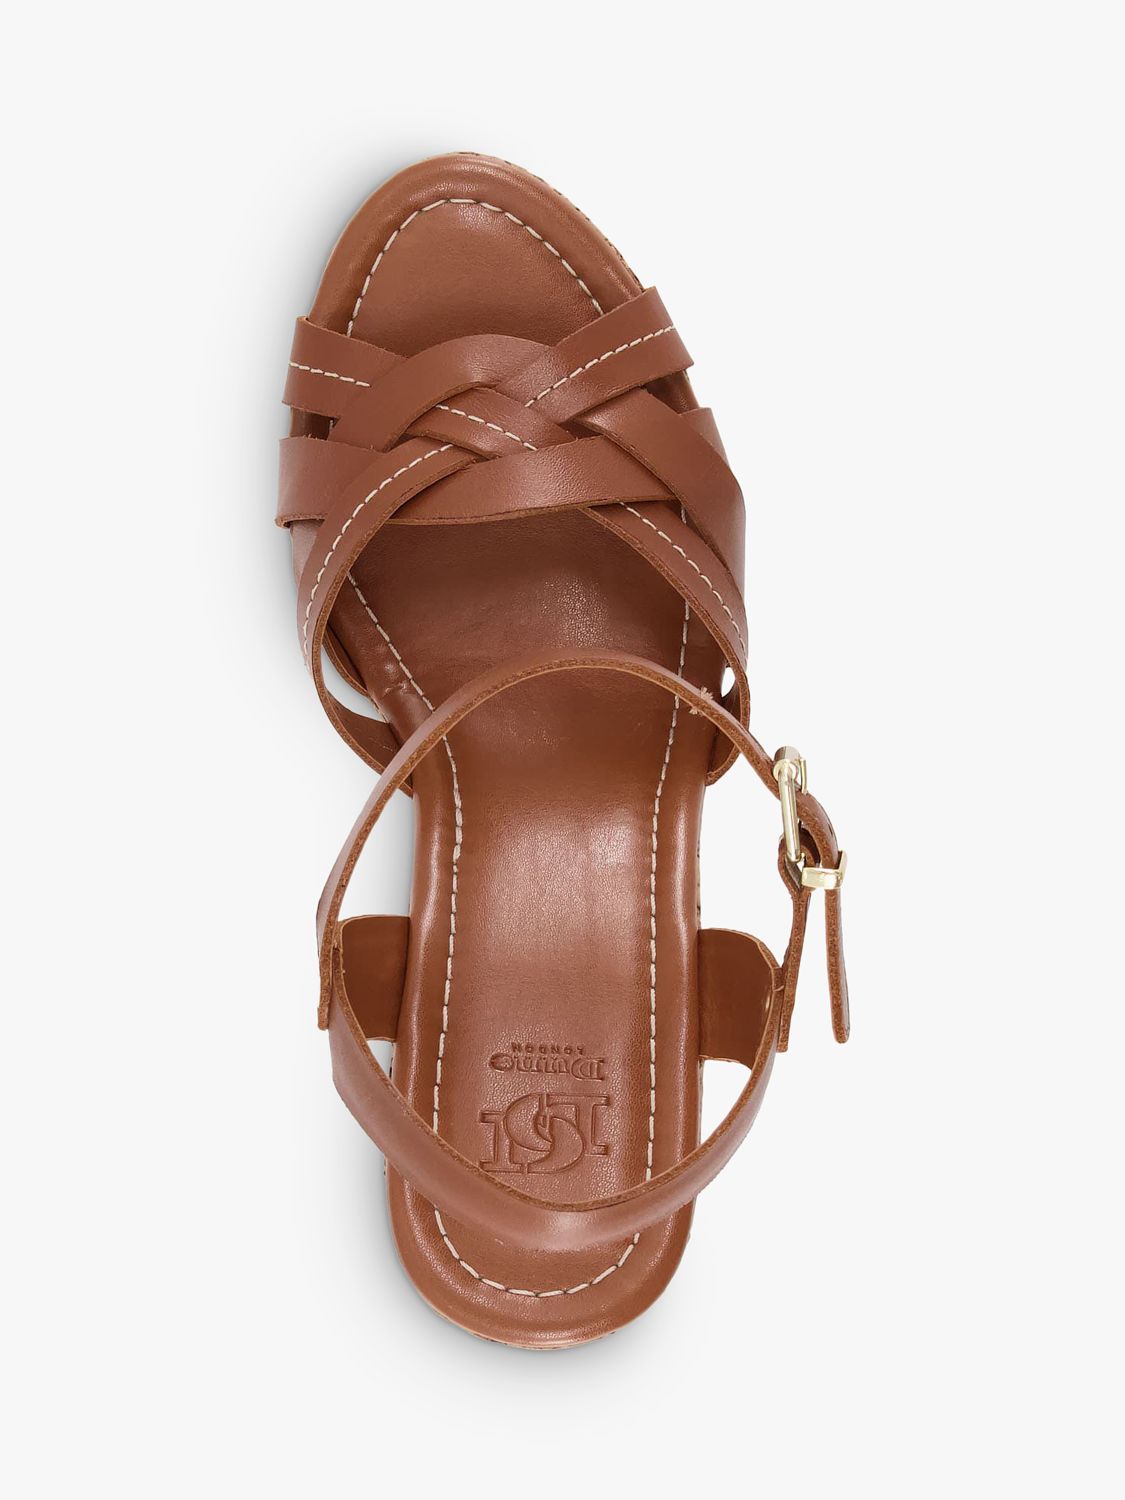 Dune Koral Leather Wedge Heel Sandals, Tan at John Lewis & Partners